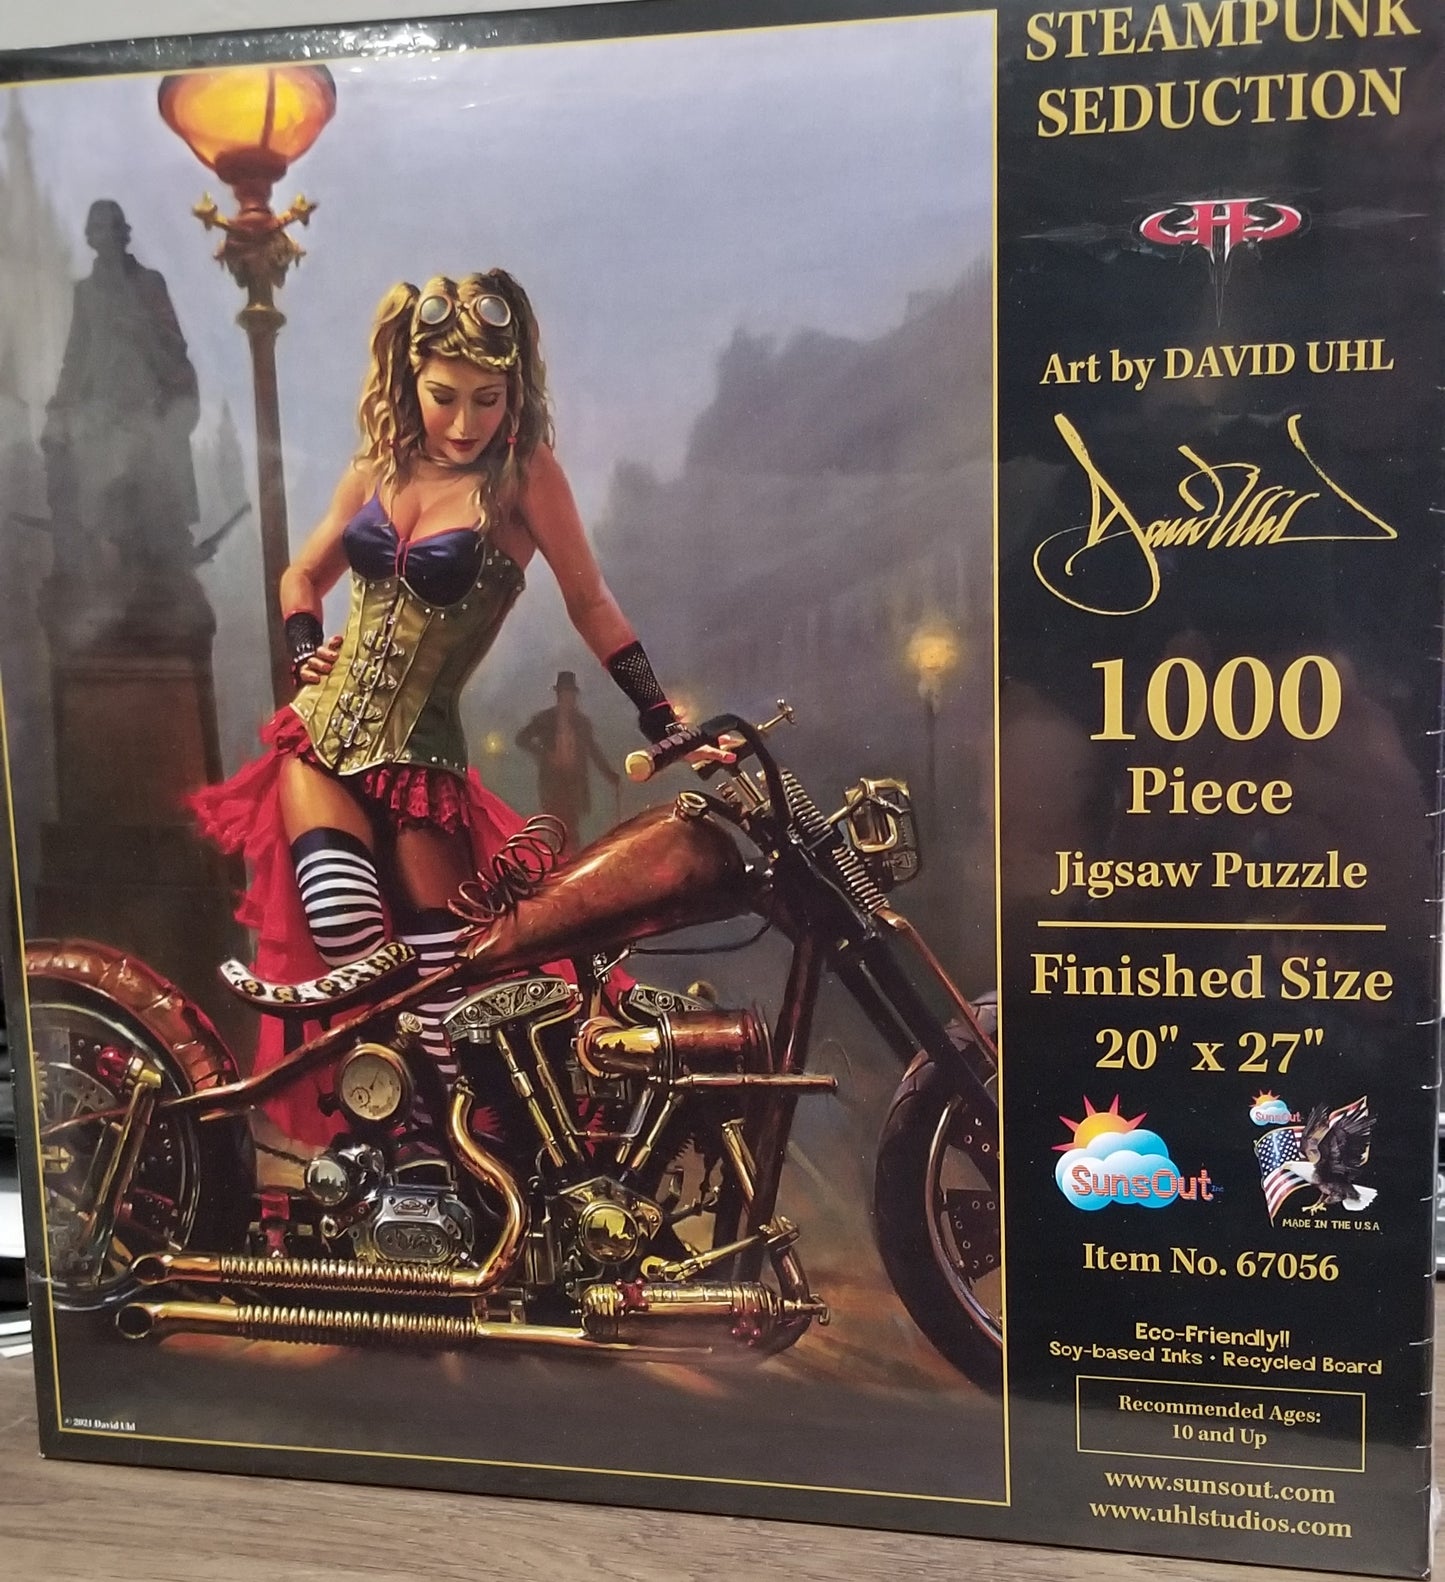 Steampunk Seduction by David Uhl, 1000 Piece Puzzle